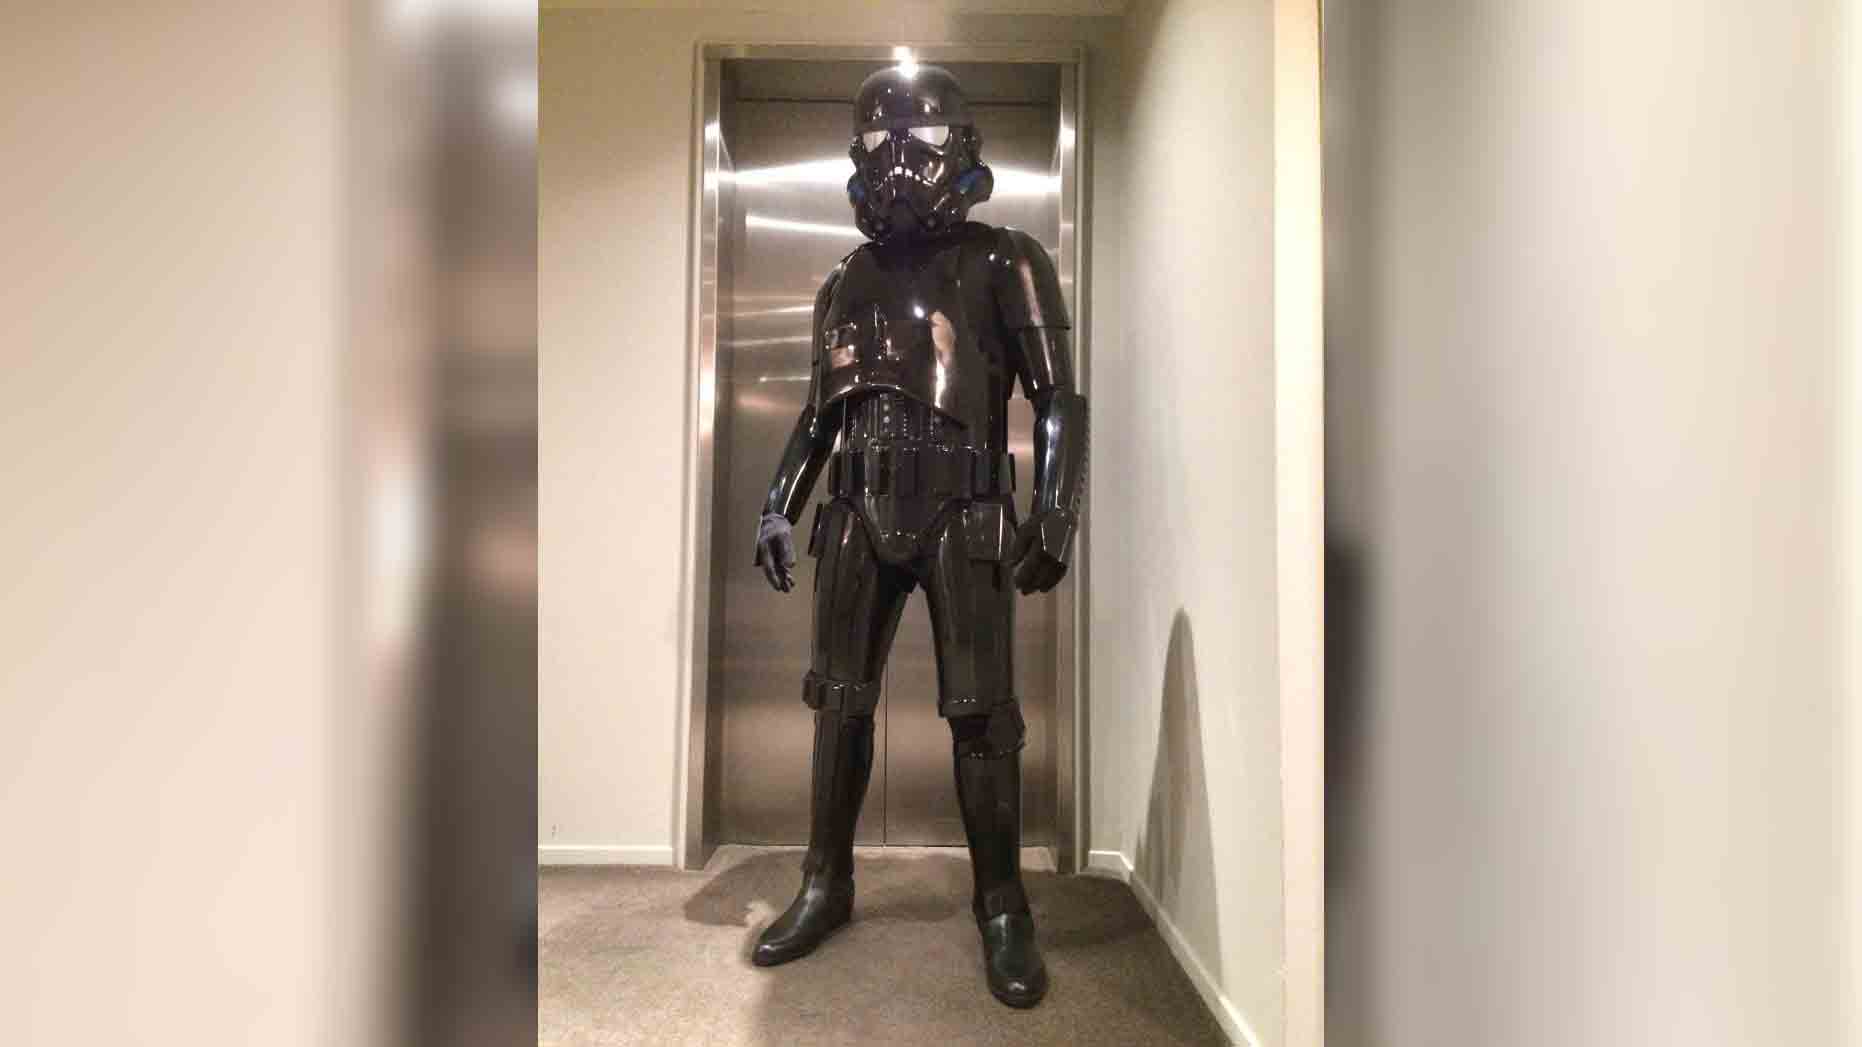 Star Wars Stormtrooper costume